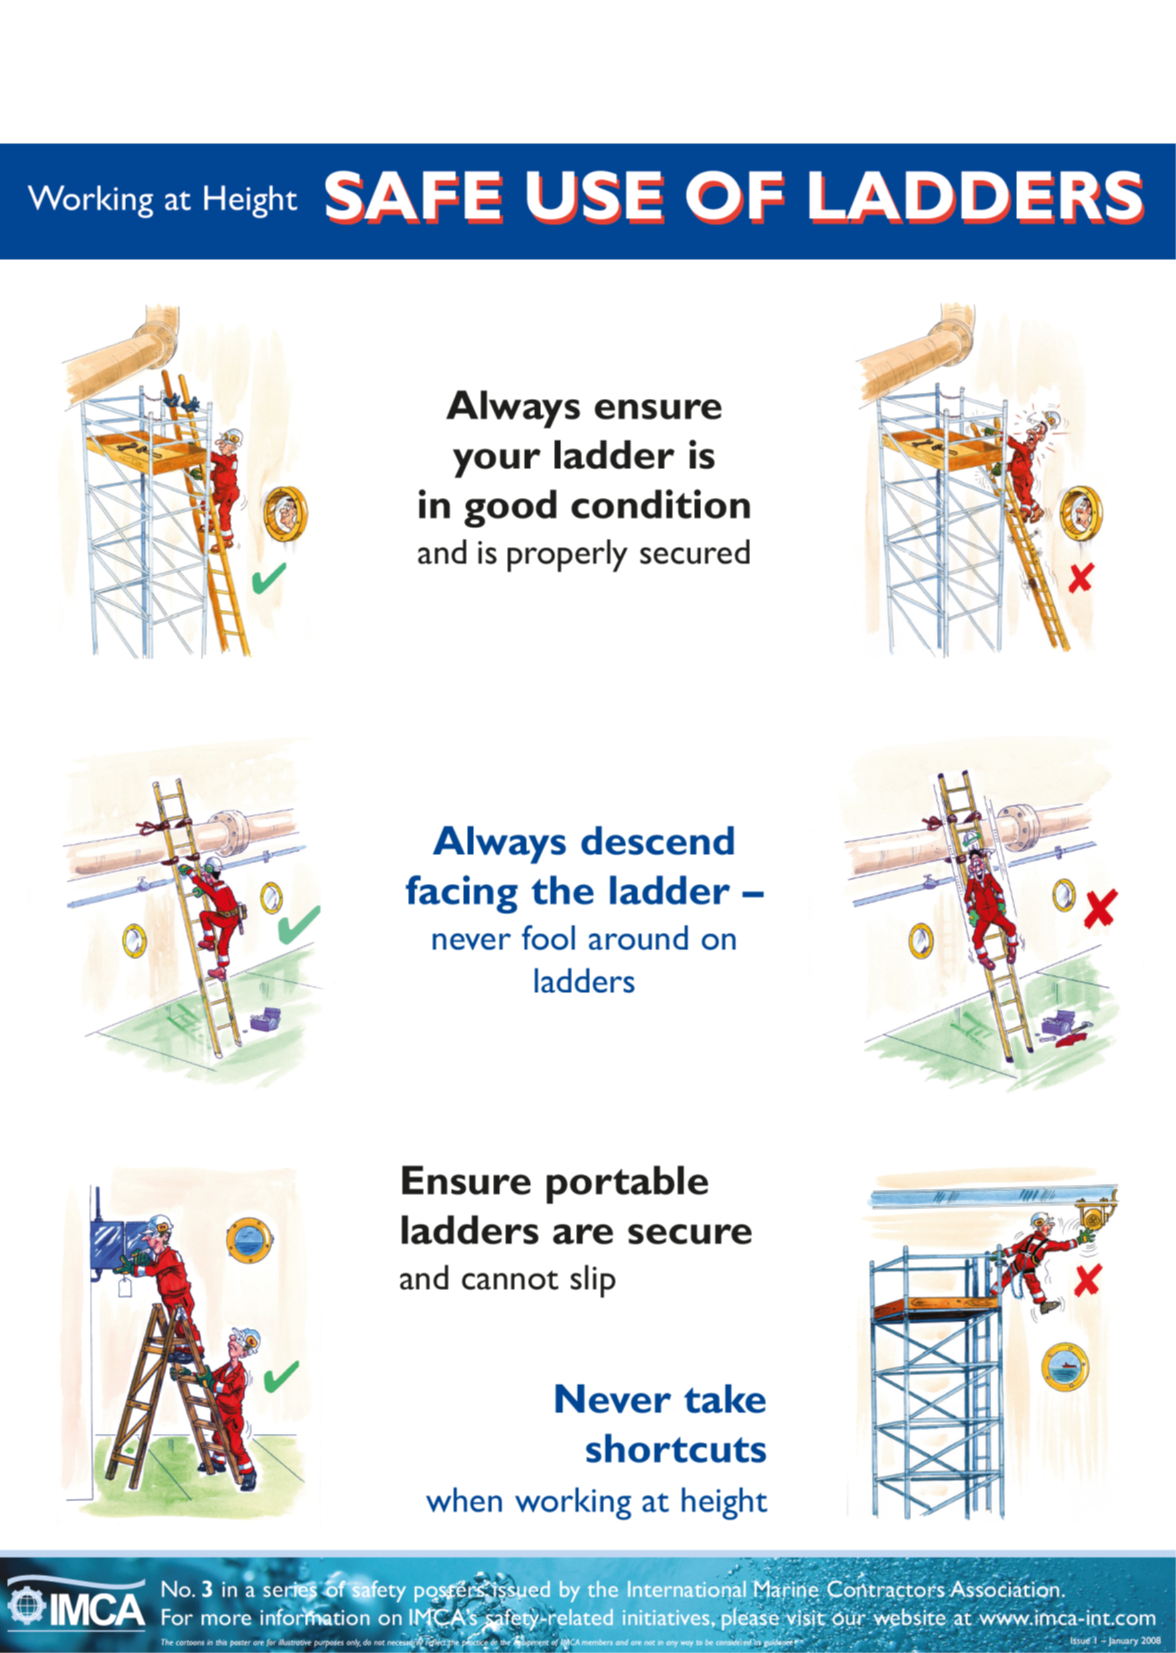 Ladder Safety Guide